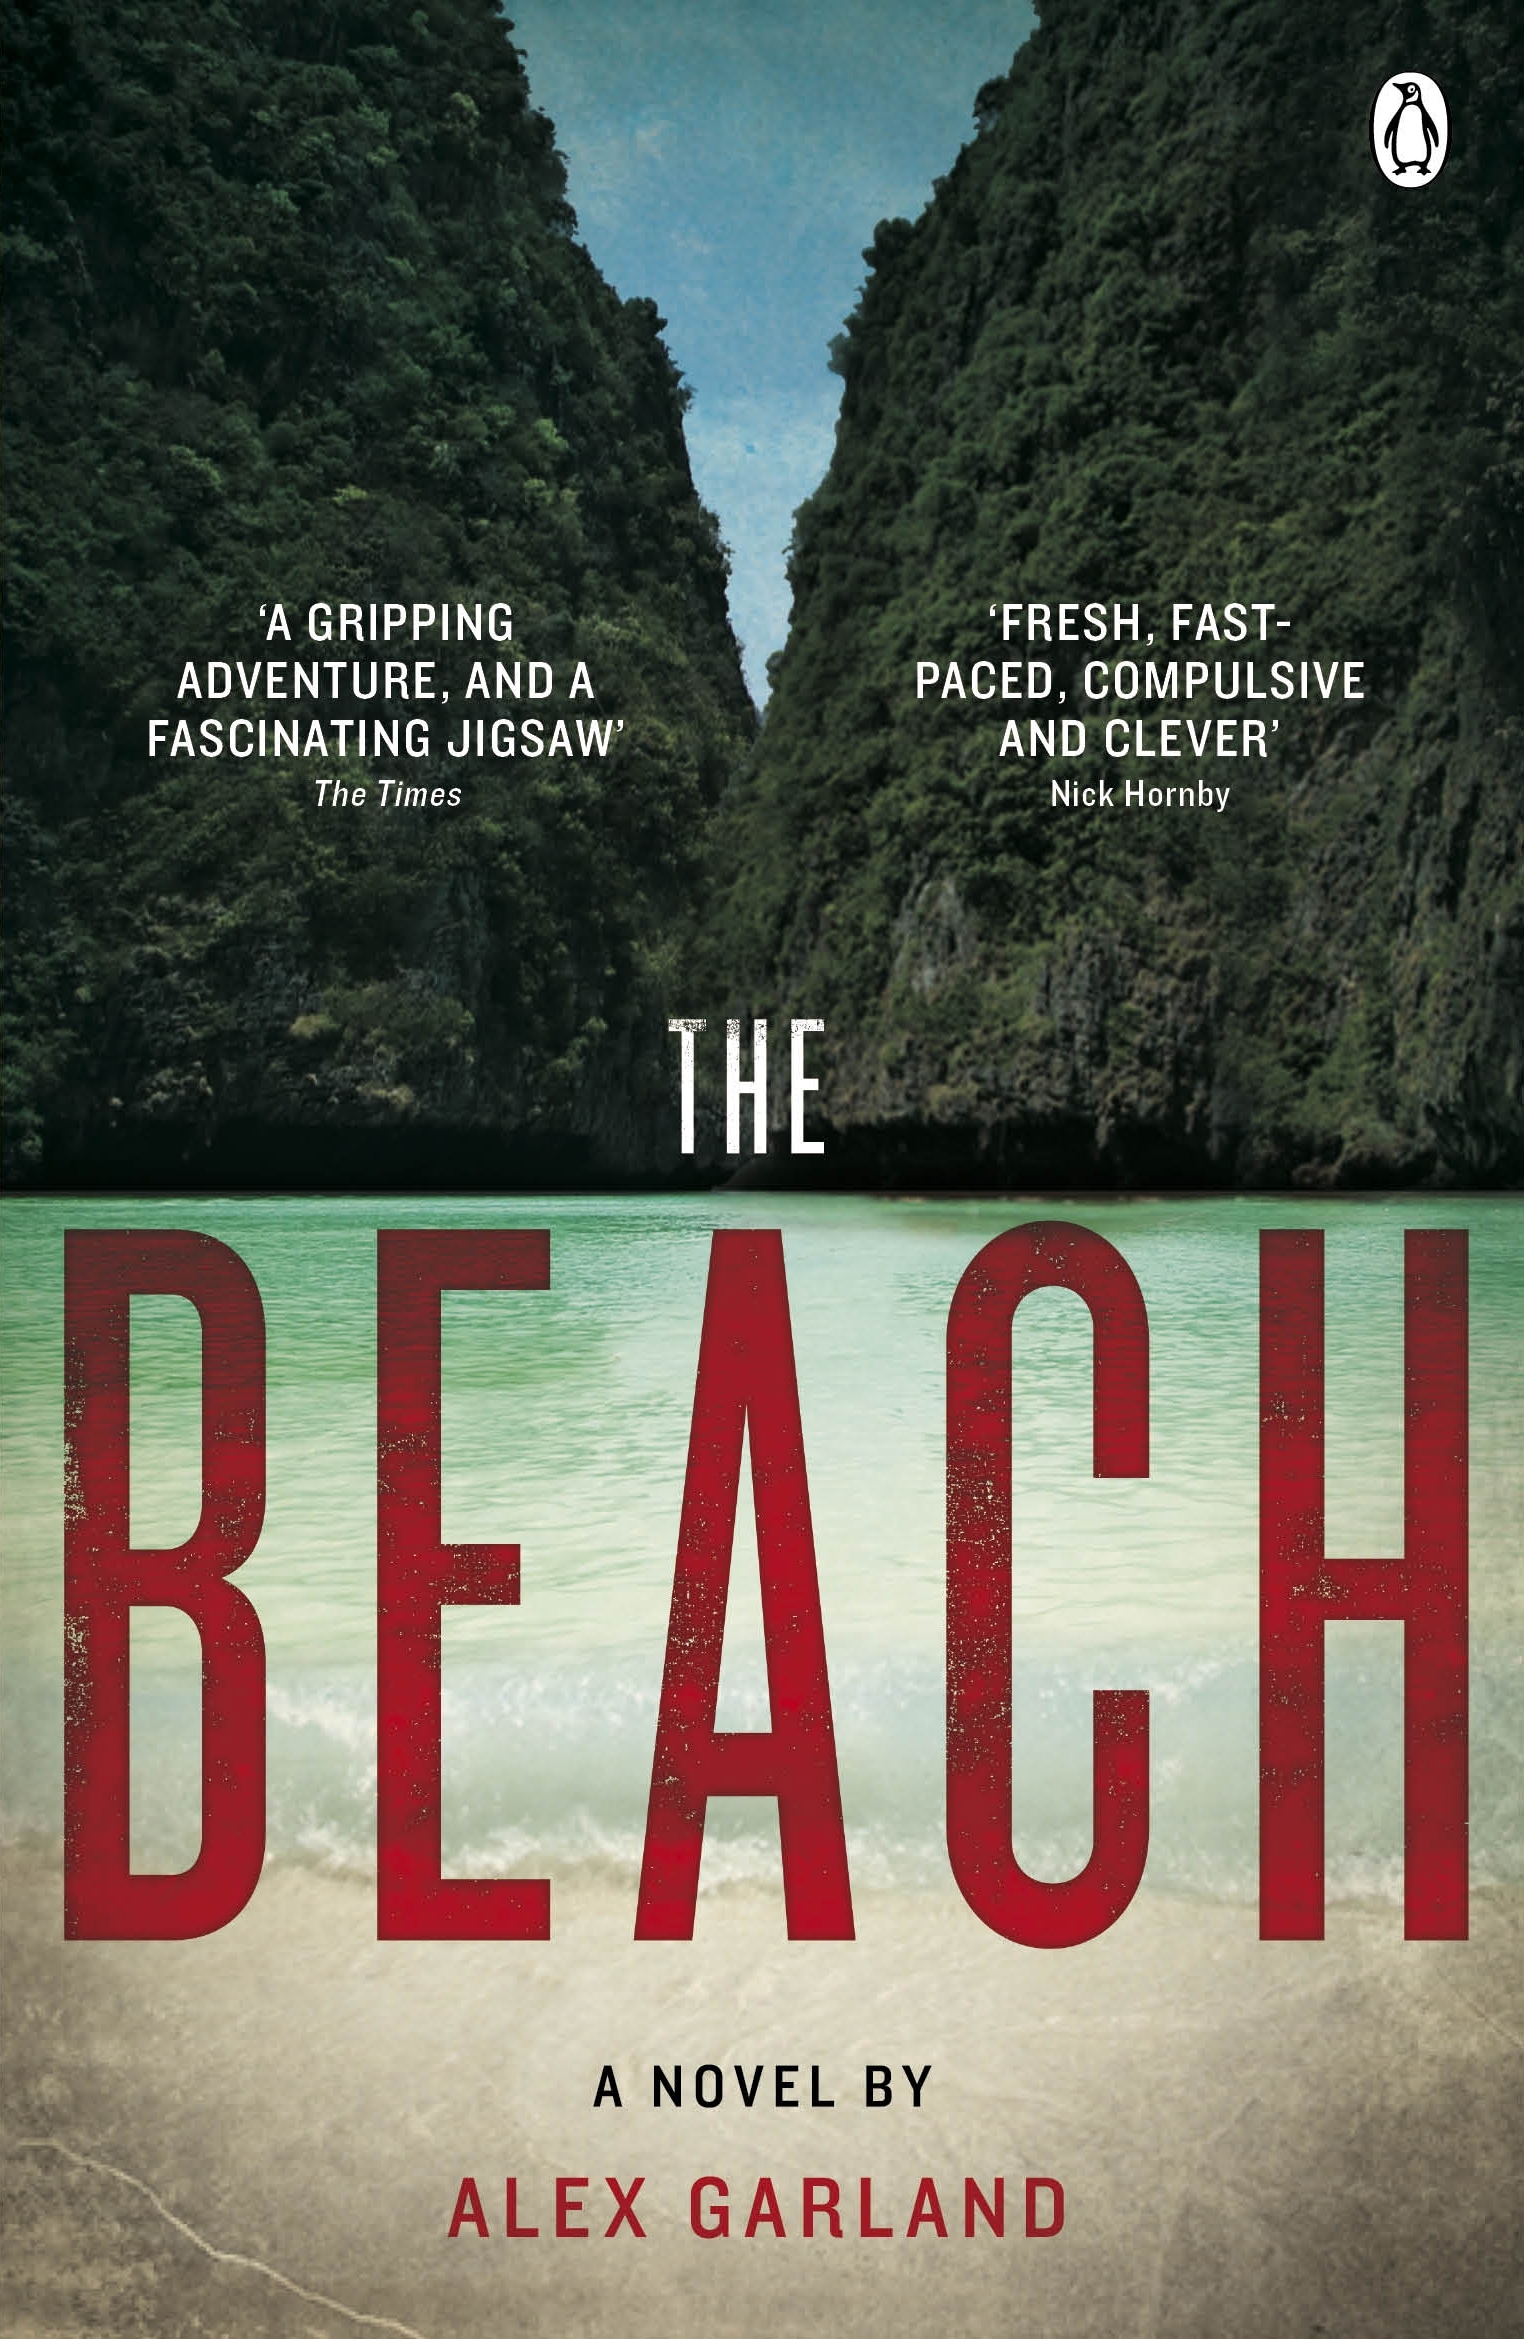 The Beach by Alex Garland - Penguin Books New Zealand